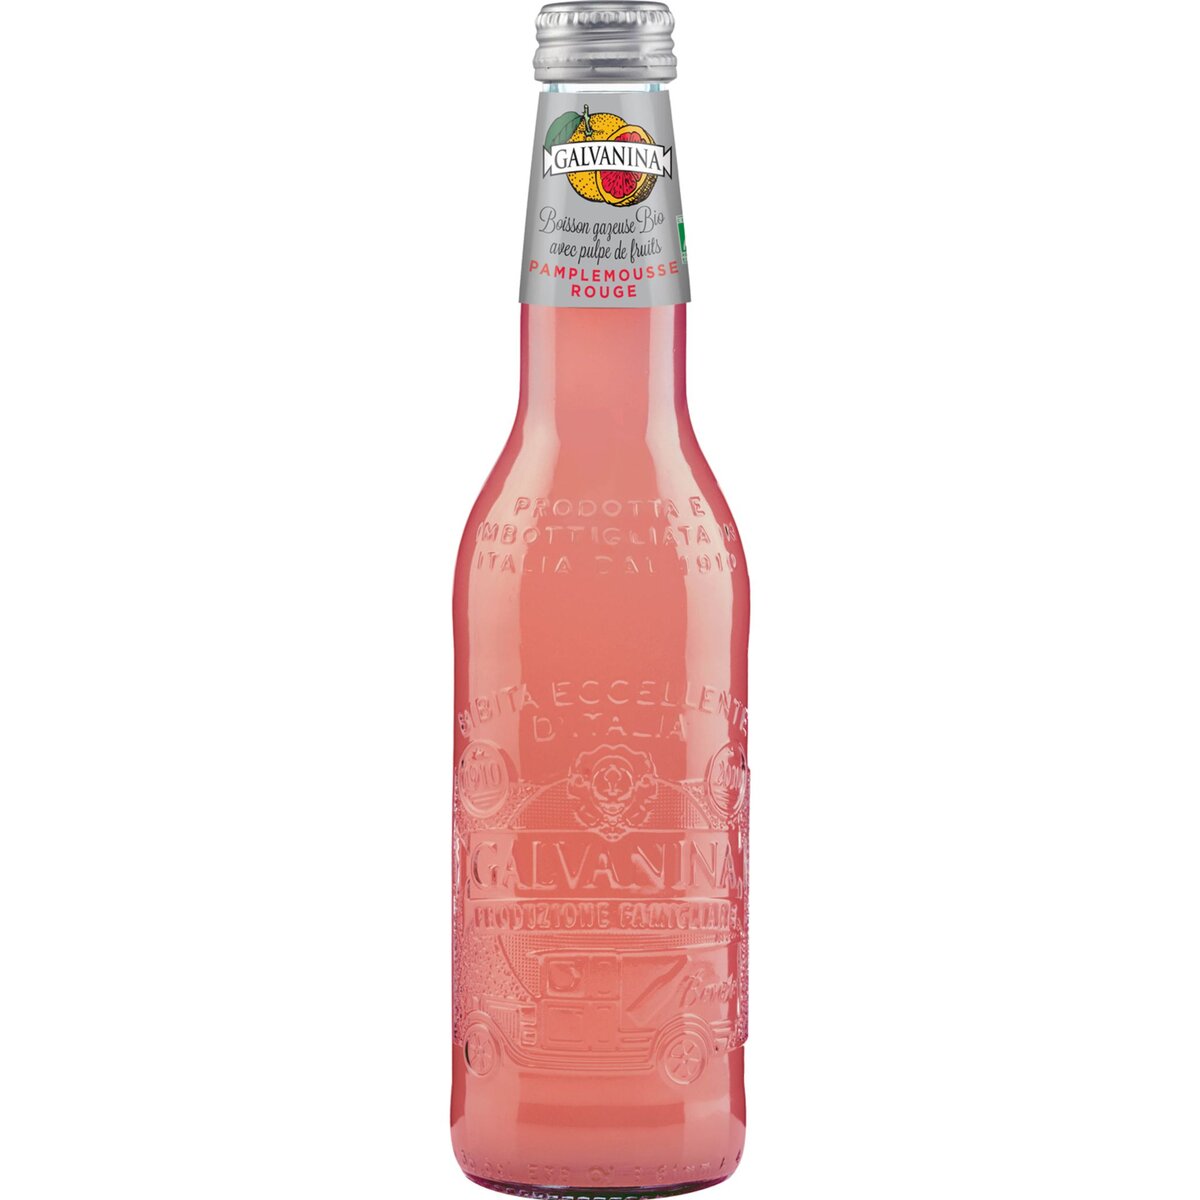 GALVANINA Galvanina boisson gazeuse bio au pamplemousse rouge 35,5cl